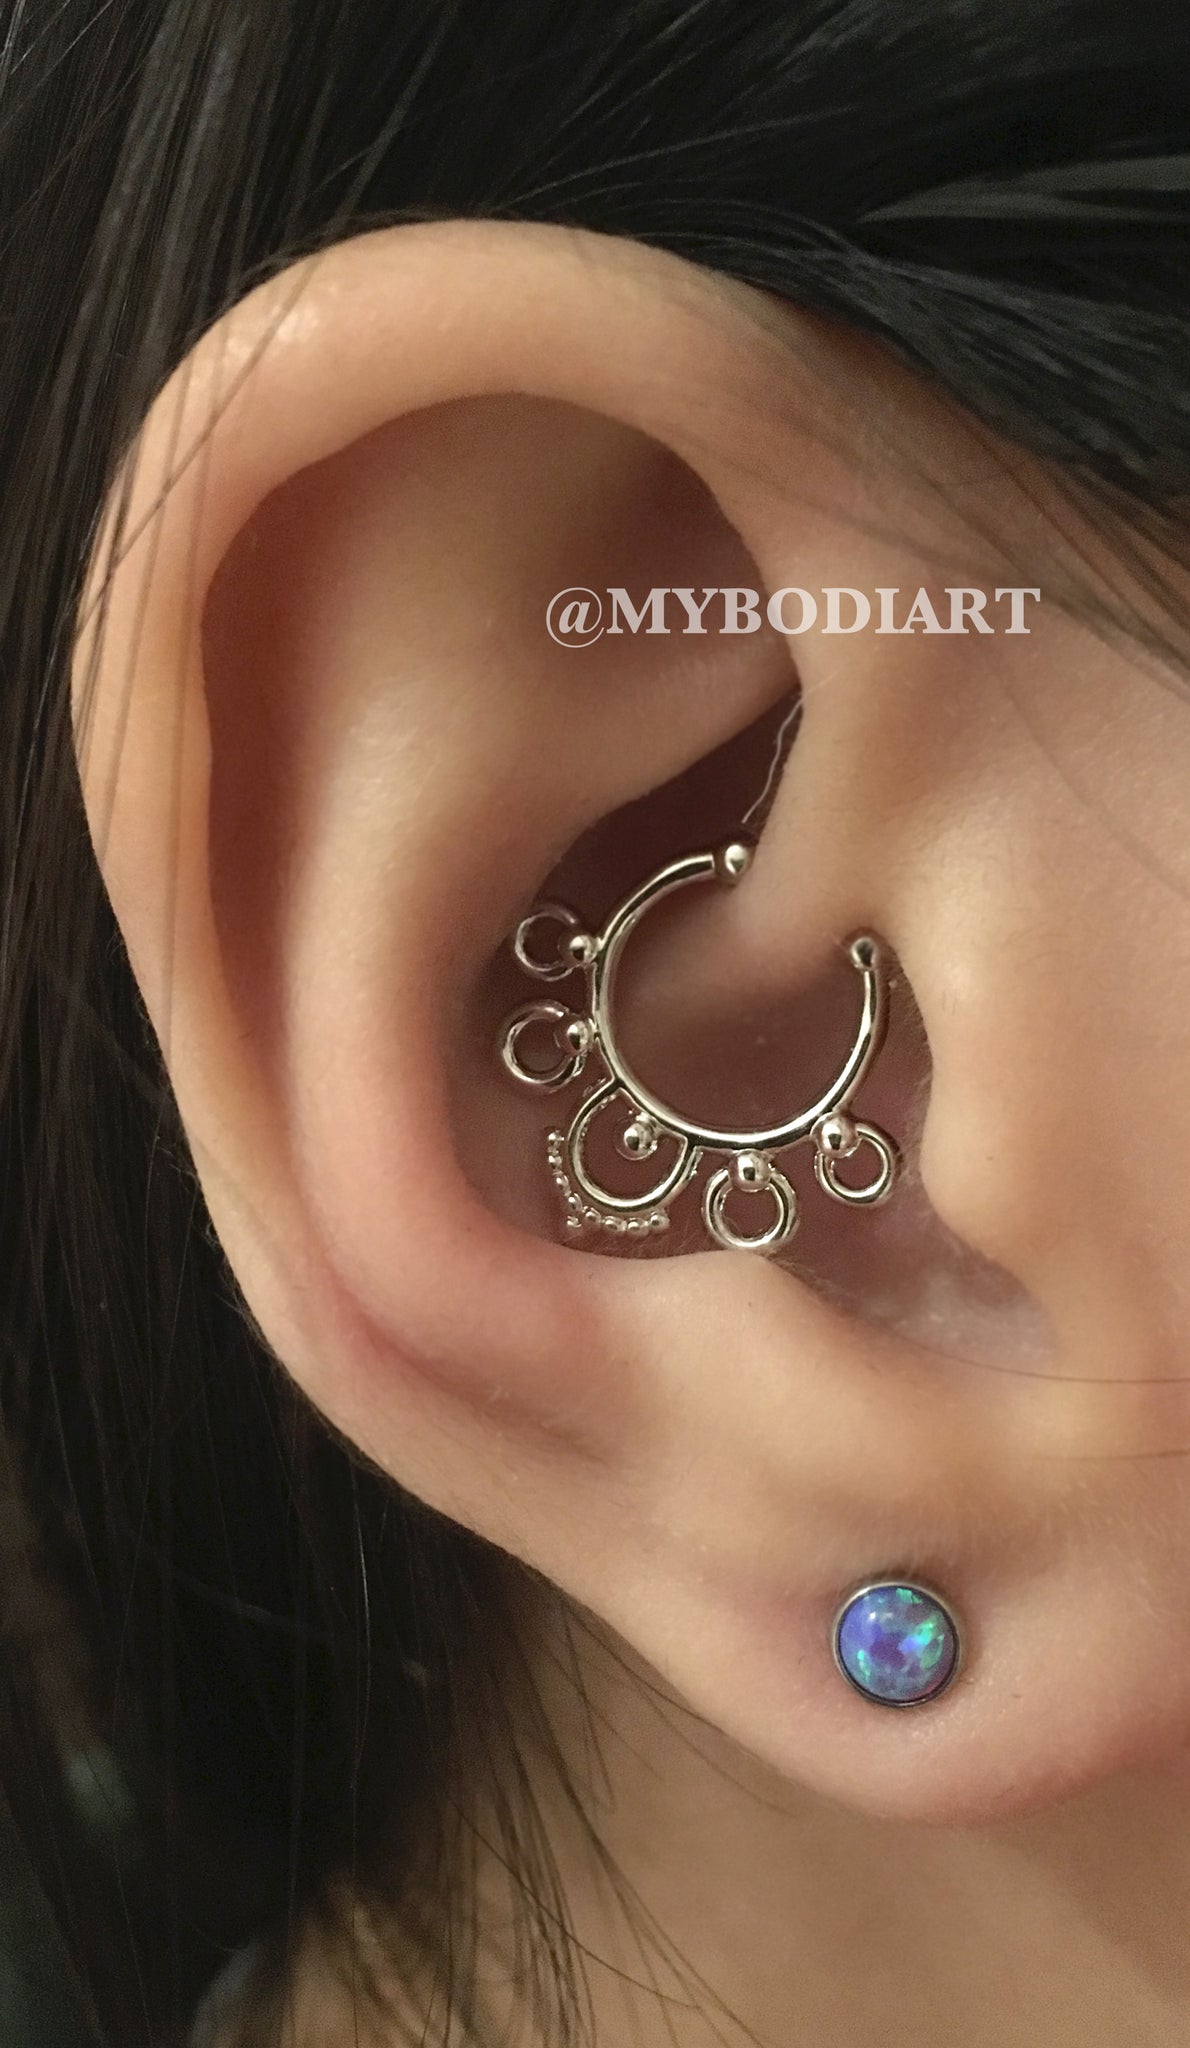 Pretty Ear Piercing Ideas for Teens - Gold Cartilage Jewelry, Daith Ring, Rook Hoop, Opal Lobe Earring Studs - www.MyBodiArt.com